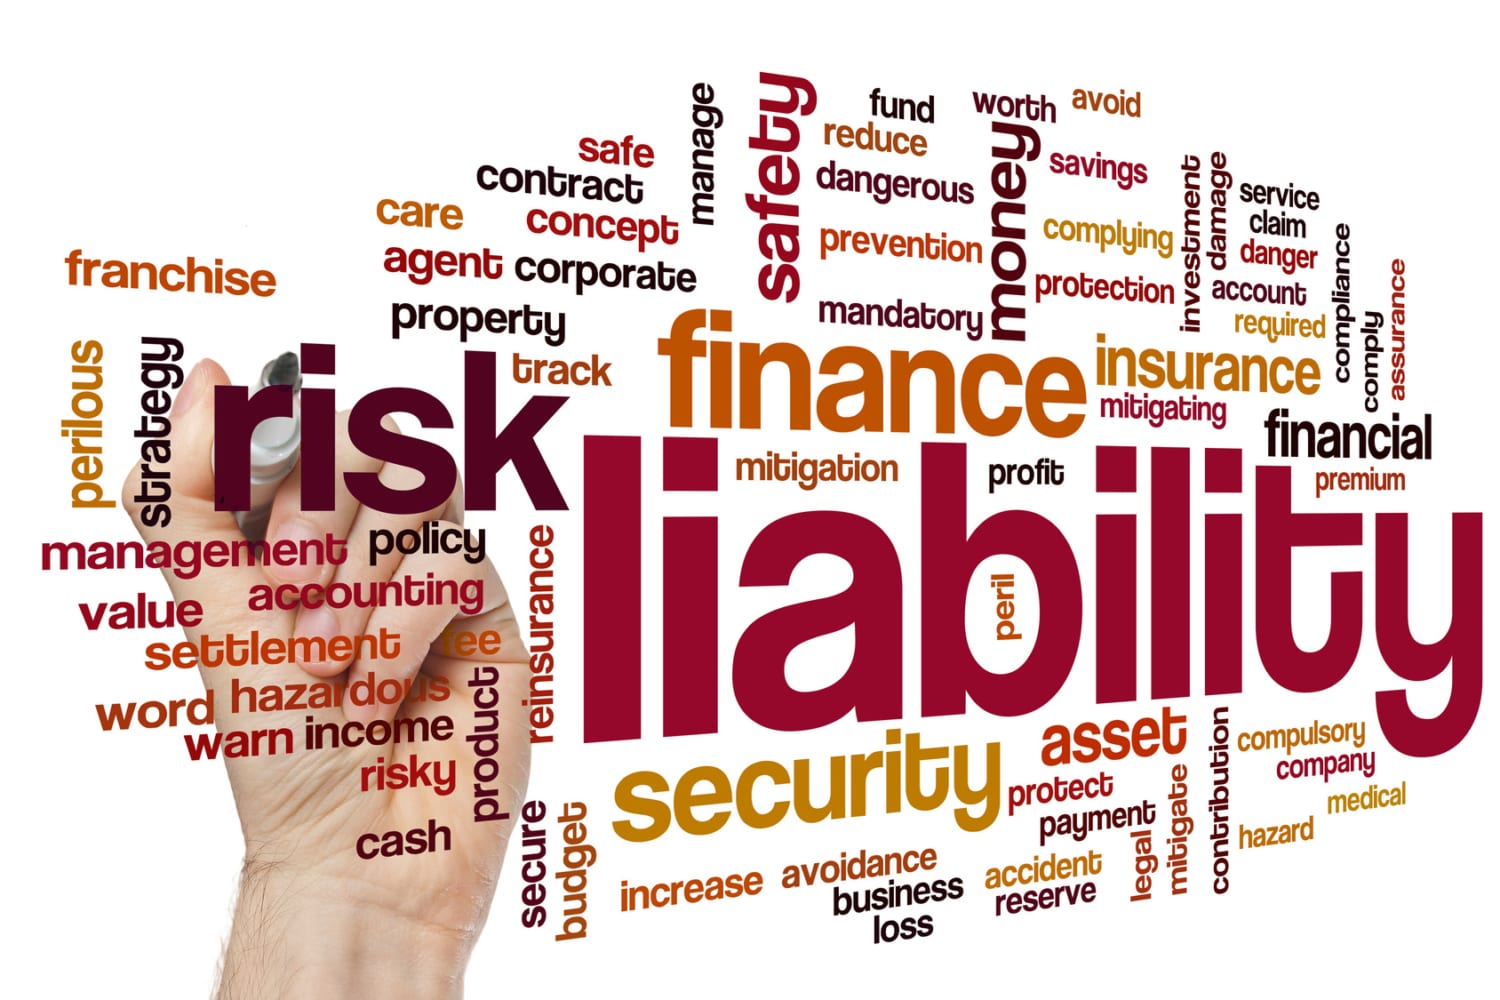 business liability insurance word cloud